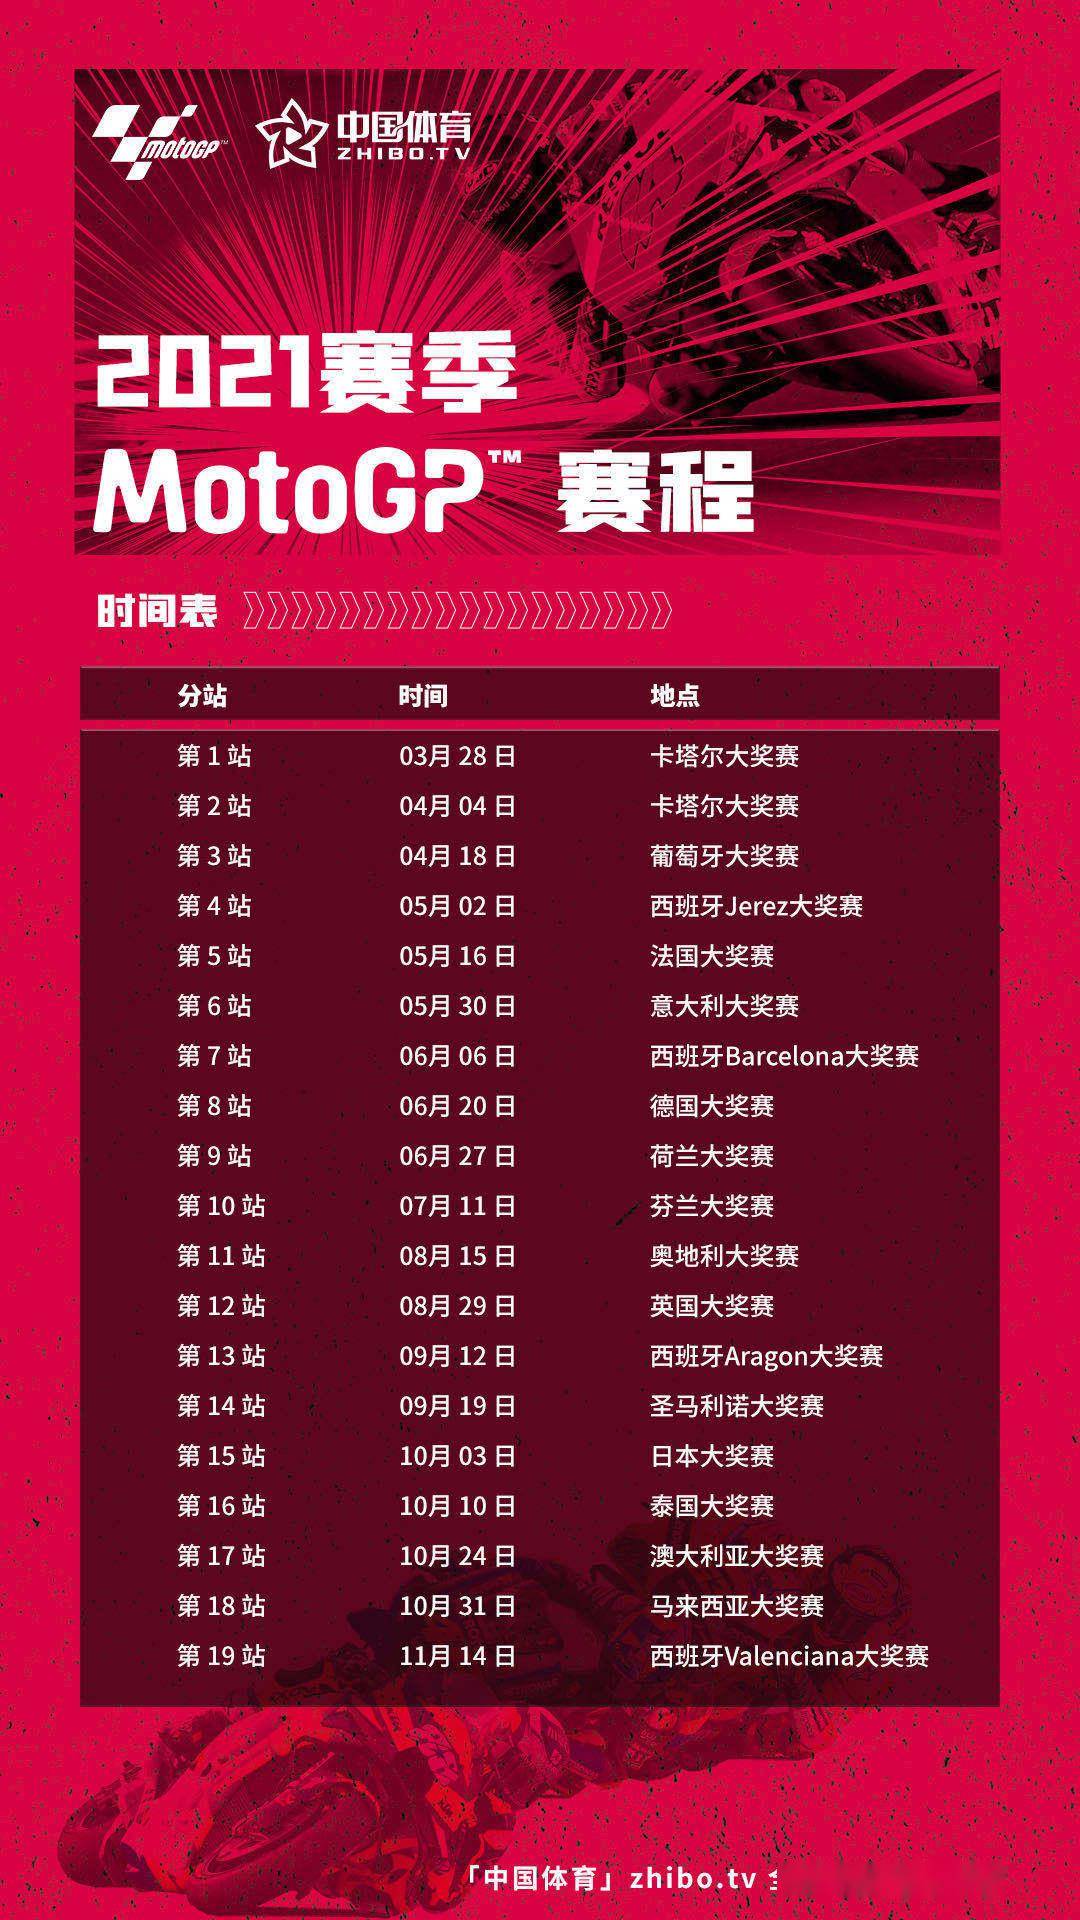 Motogp 落户中国体育全年播出超300小时 直播